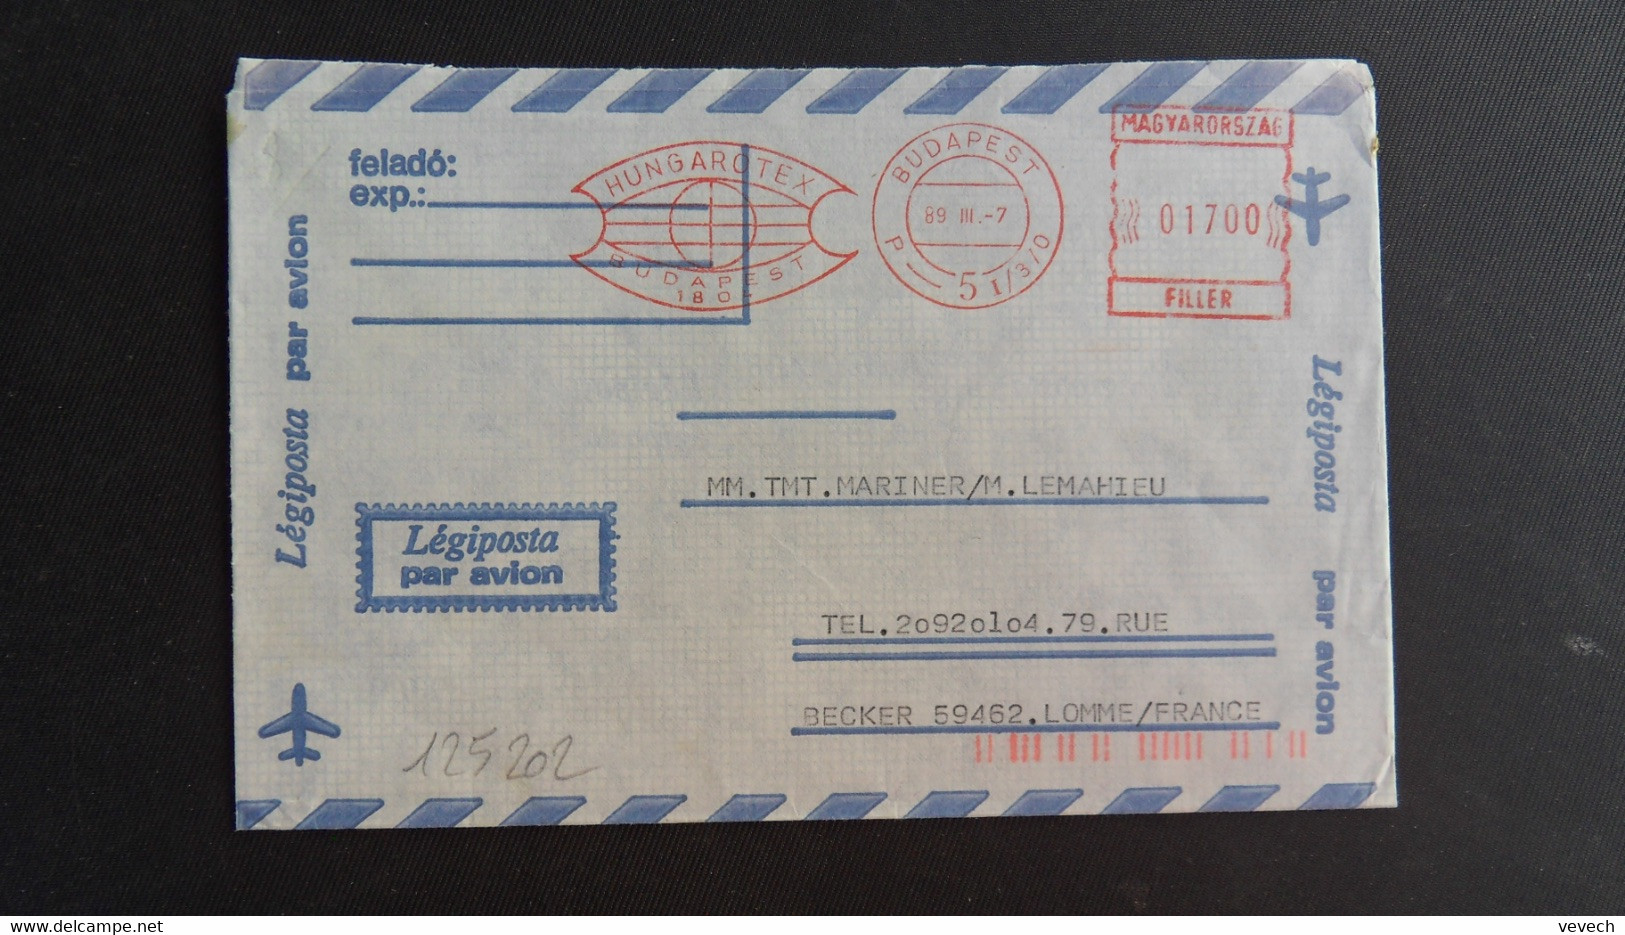 LETTRE Par Avion Pour La FRANCE EMA à 01700 Du 89 III 7 BUDAPEST + HUNGAROTEX - Cartas & Documentos